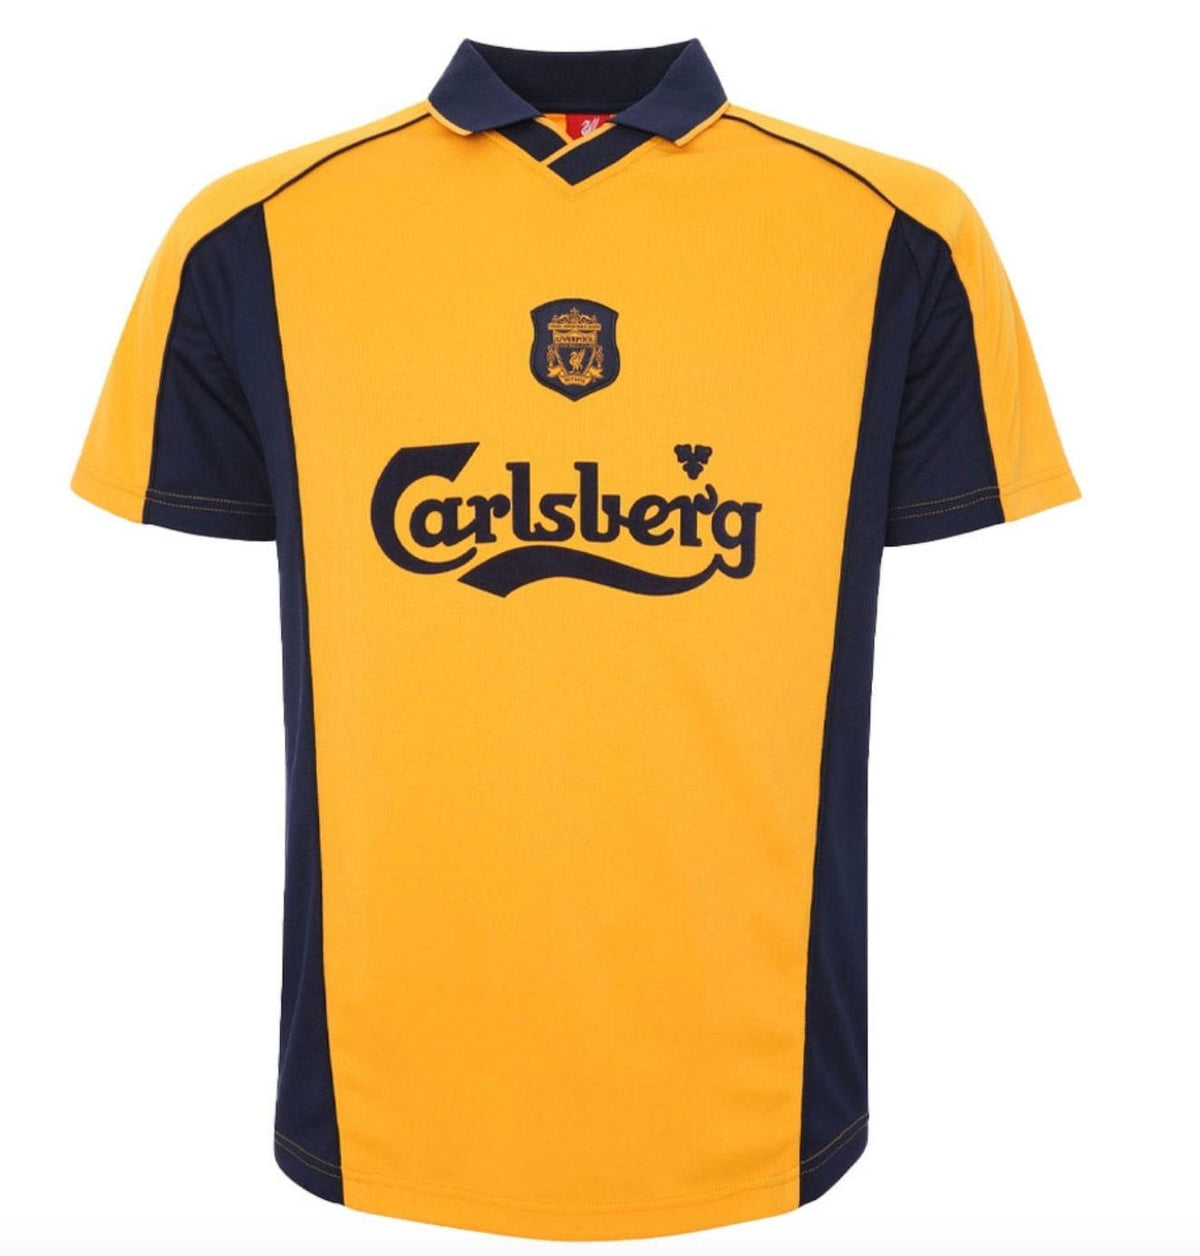 Vintage Liverpool 2000-2001 away shirt